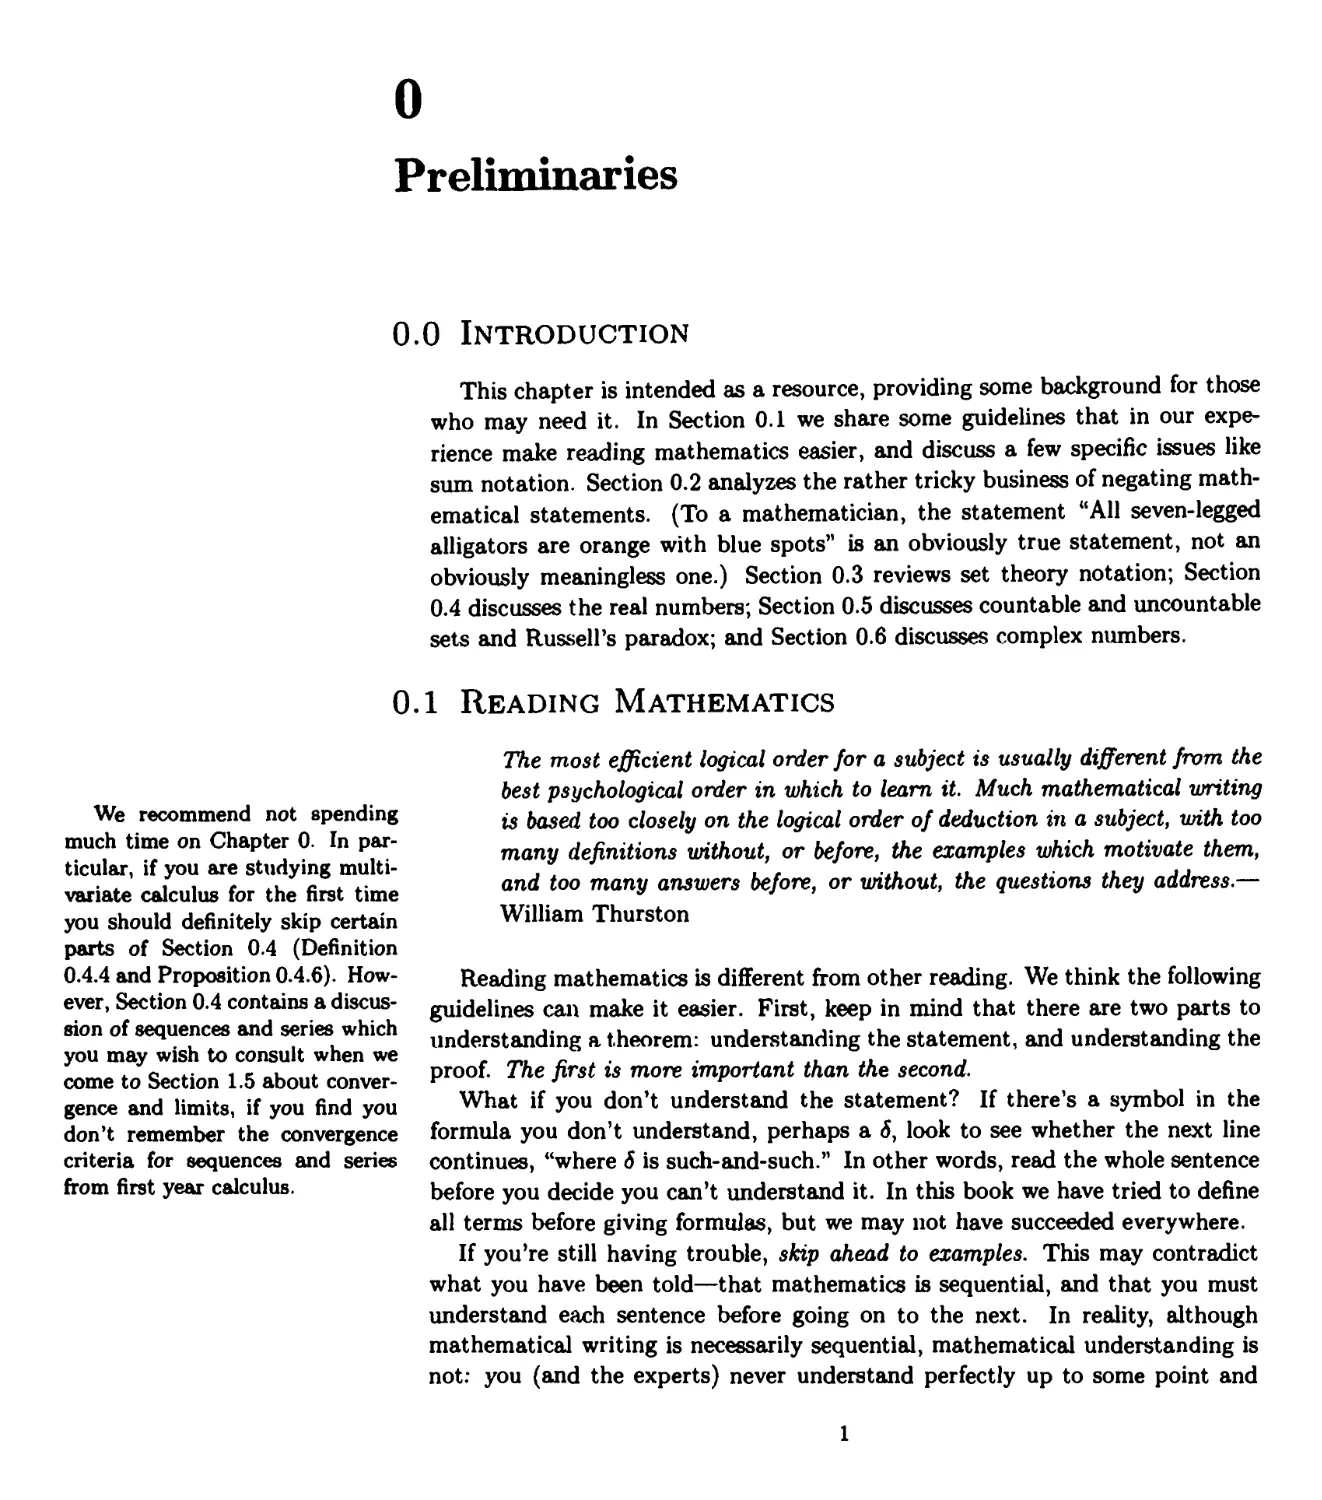 CHAPTER 0 Preliminaries
0.1 Reading Mathematics